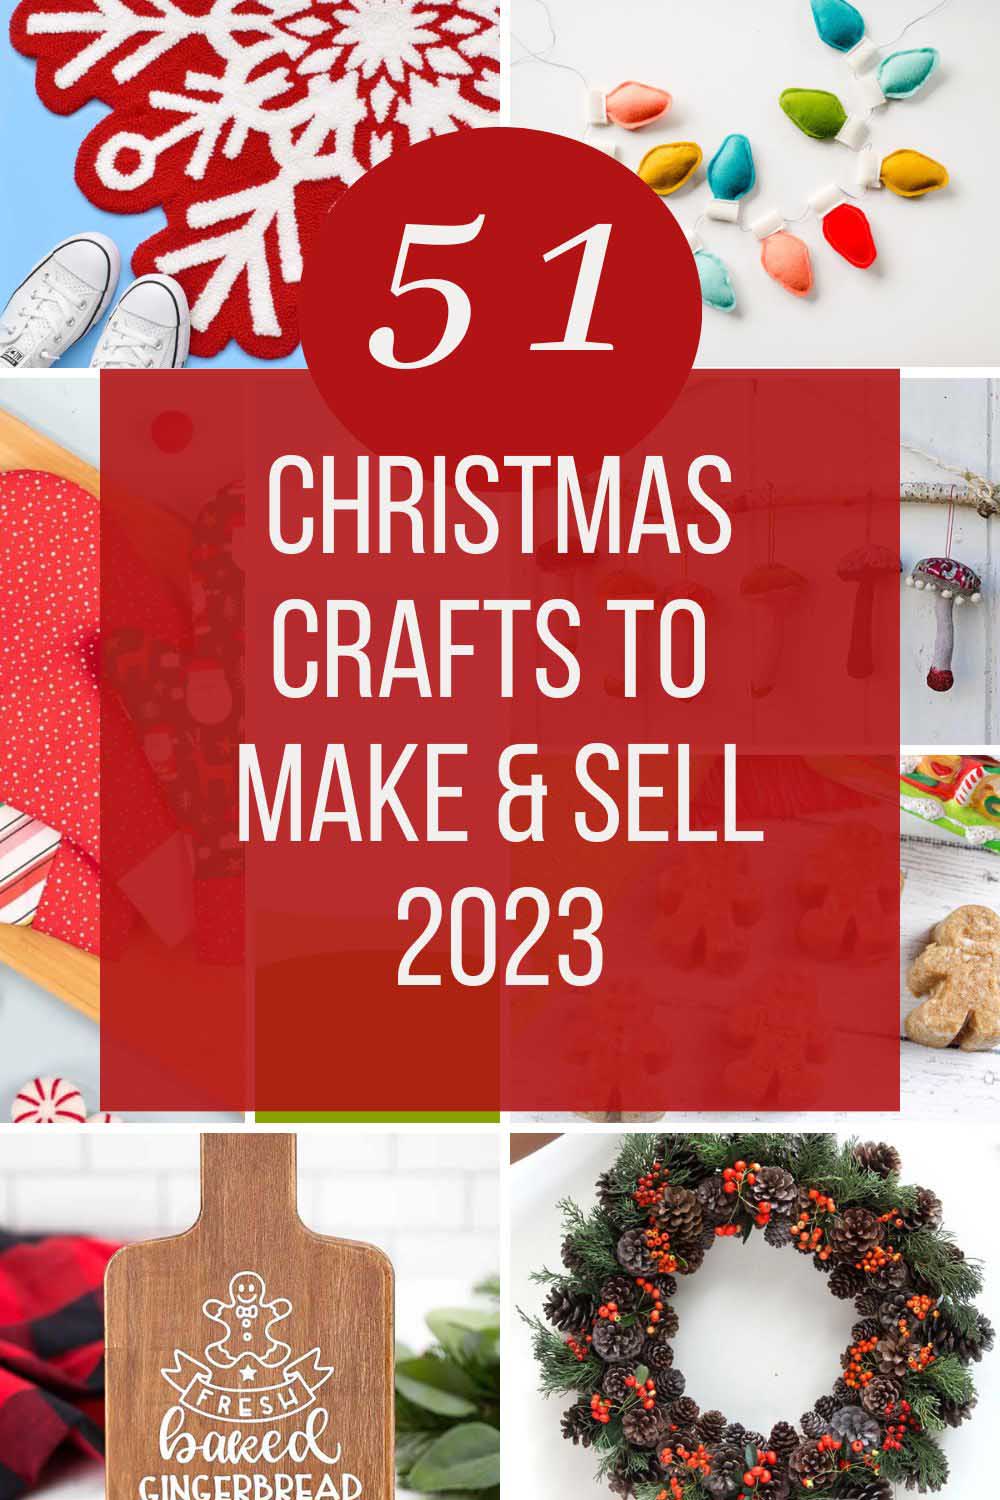 Christmas crafts to make and sell 2023 pin